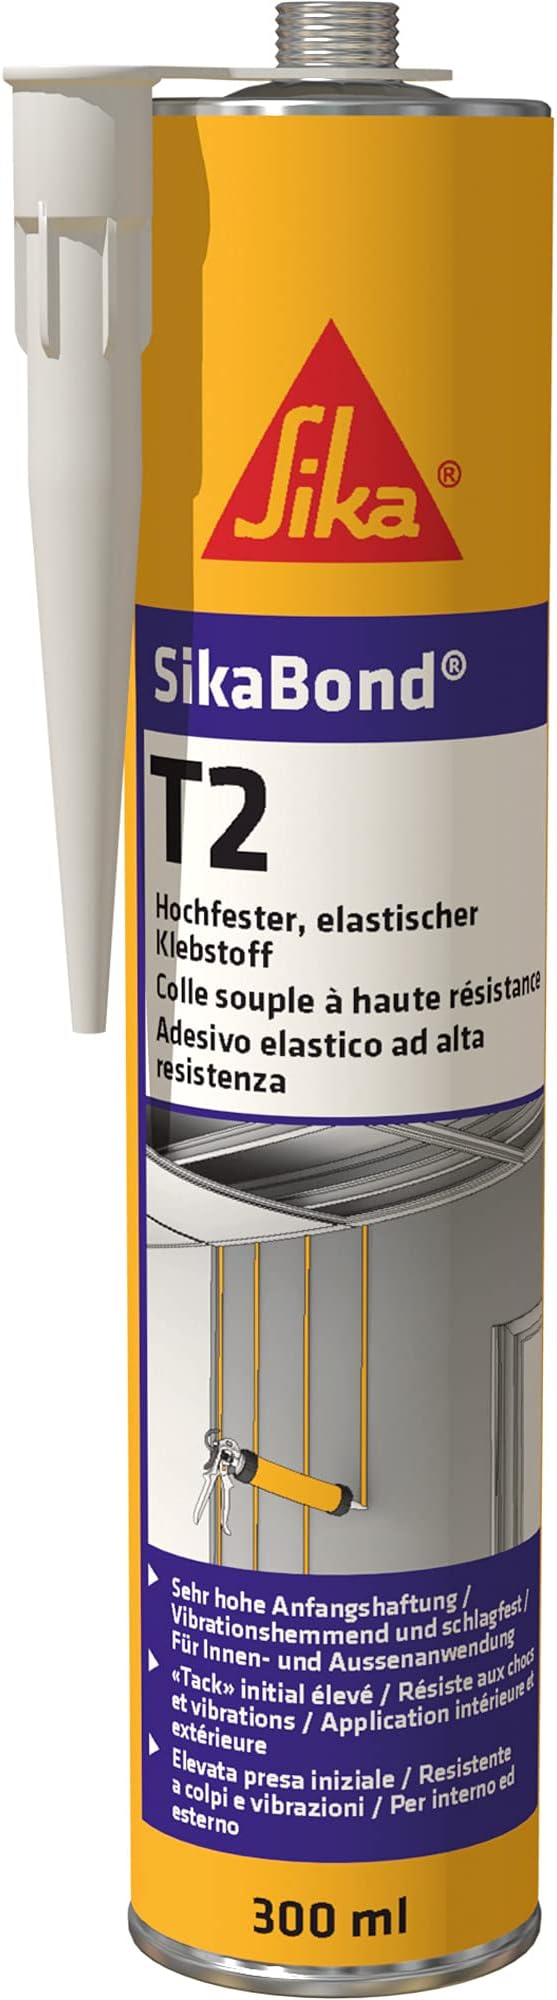 Sika Bond T2 Flexible Polyurethane (Self Adhesive)